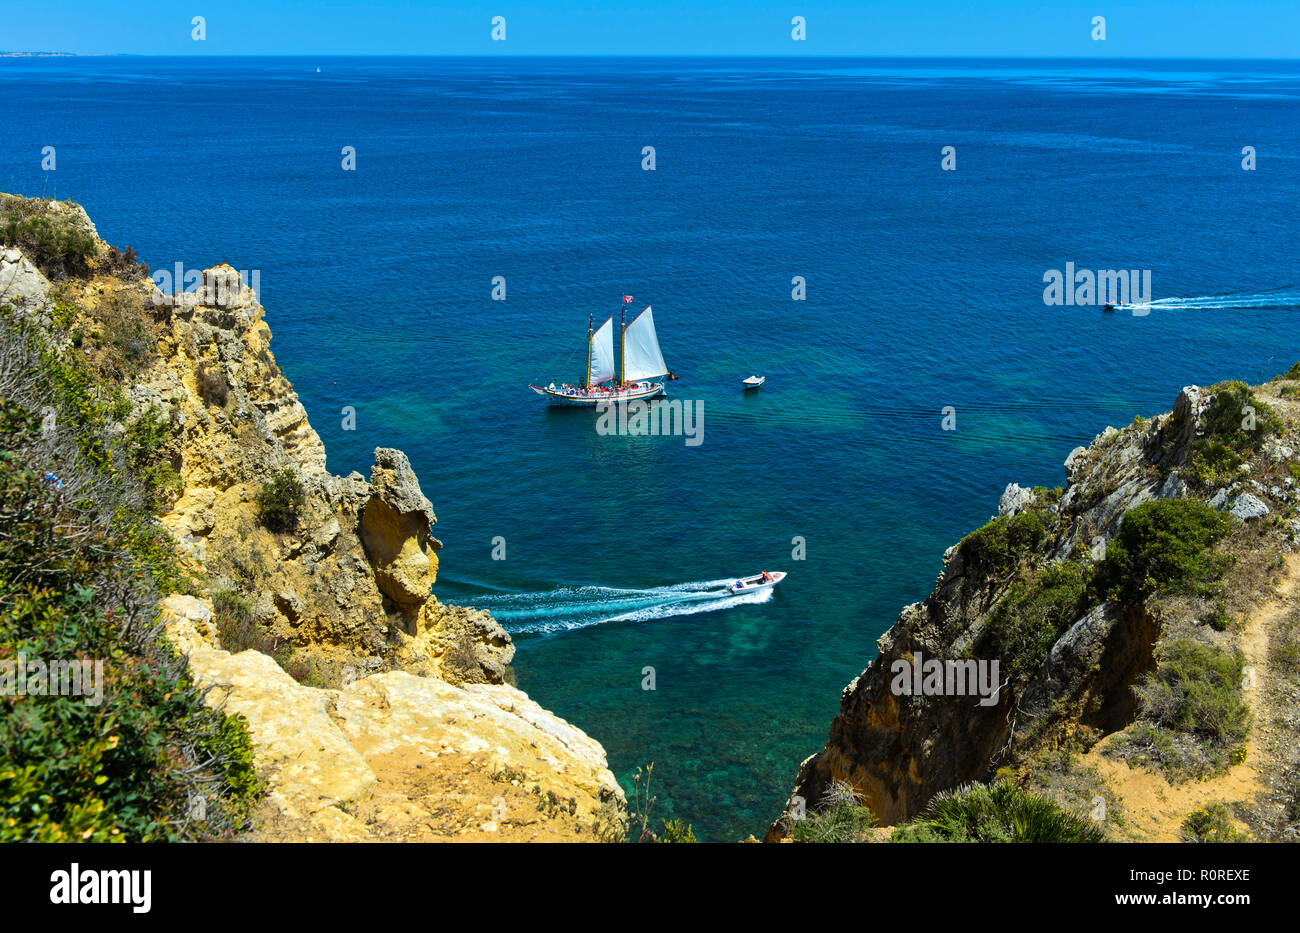 Sailboat and motorboats off Camilo Beach, Praia do Camilo, Lagos, Algarve, Portugal Stock Photo